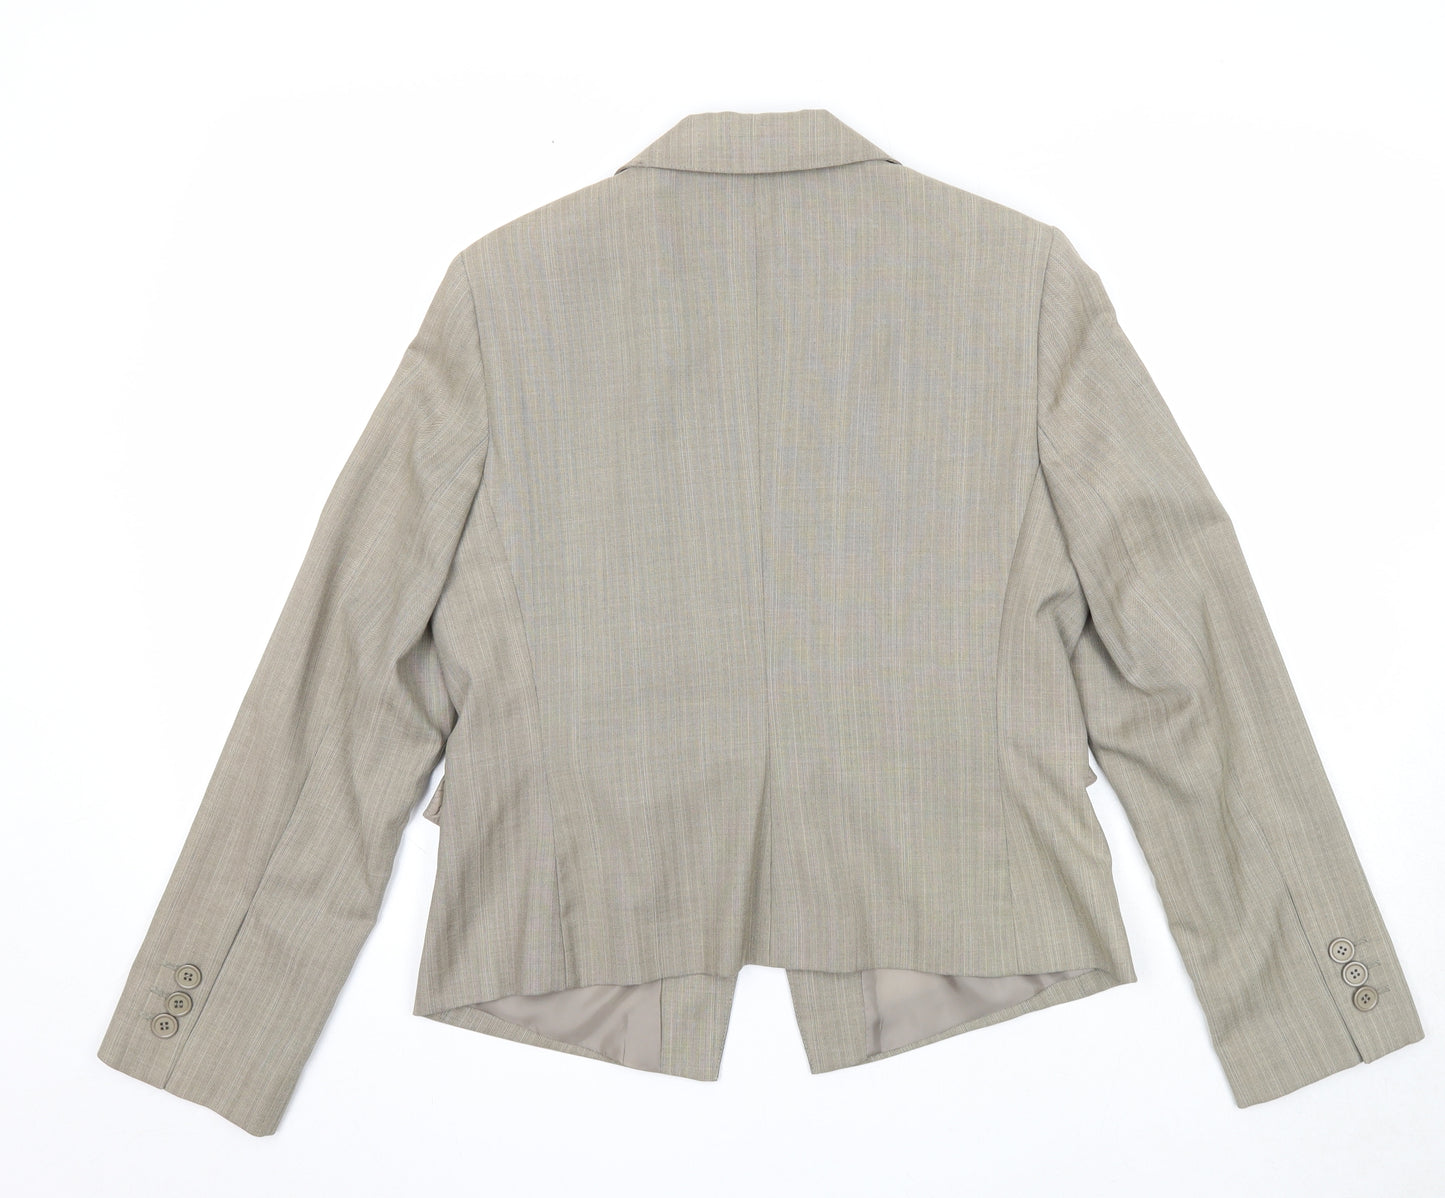 Laura Brook Womens Grey Polyester Jacket Blazer Size 14